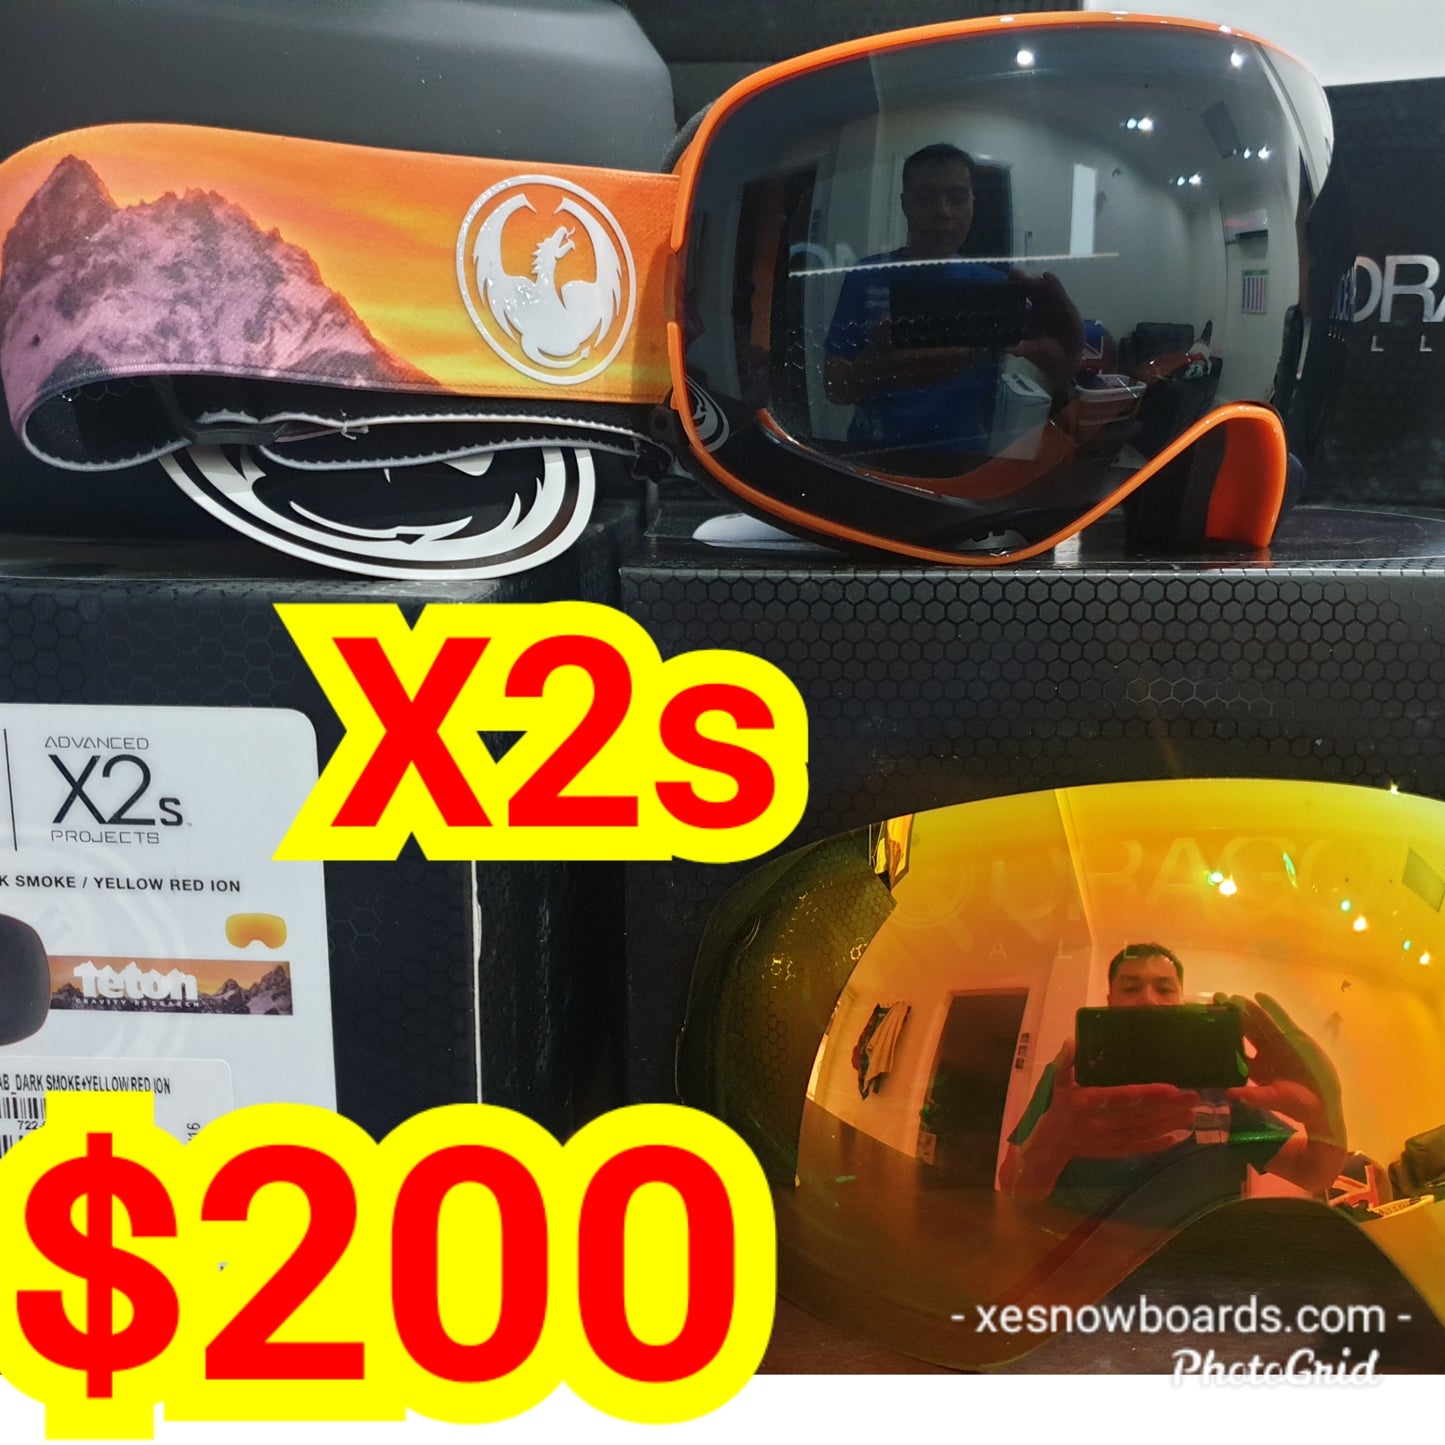 Dragons X2s with bonus lens, dragon goggles - orange panoramic mountain